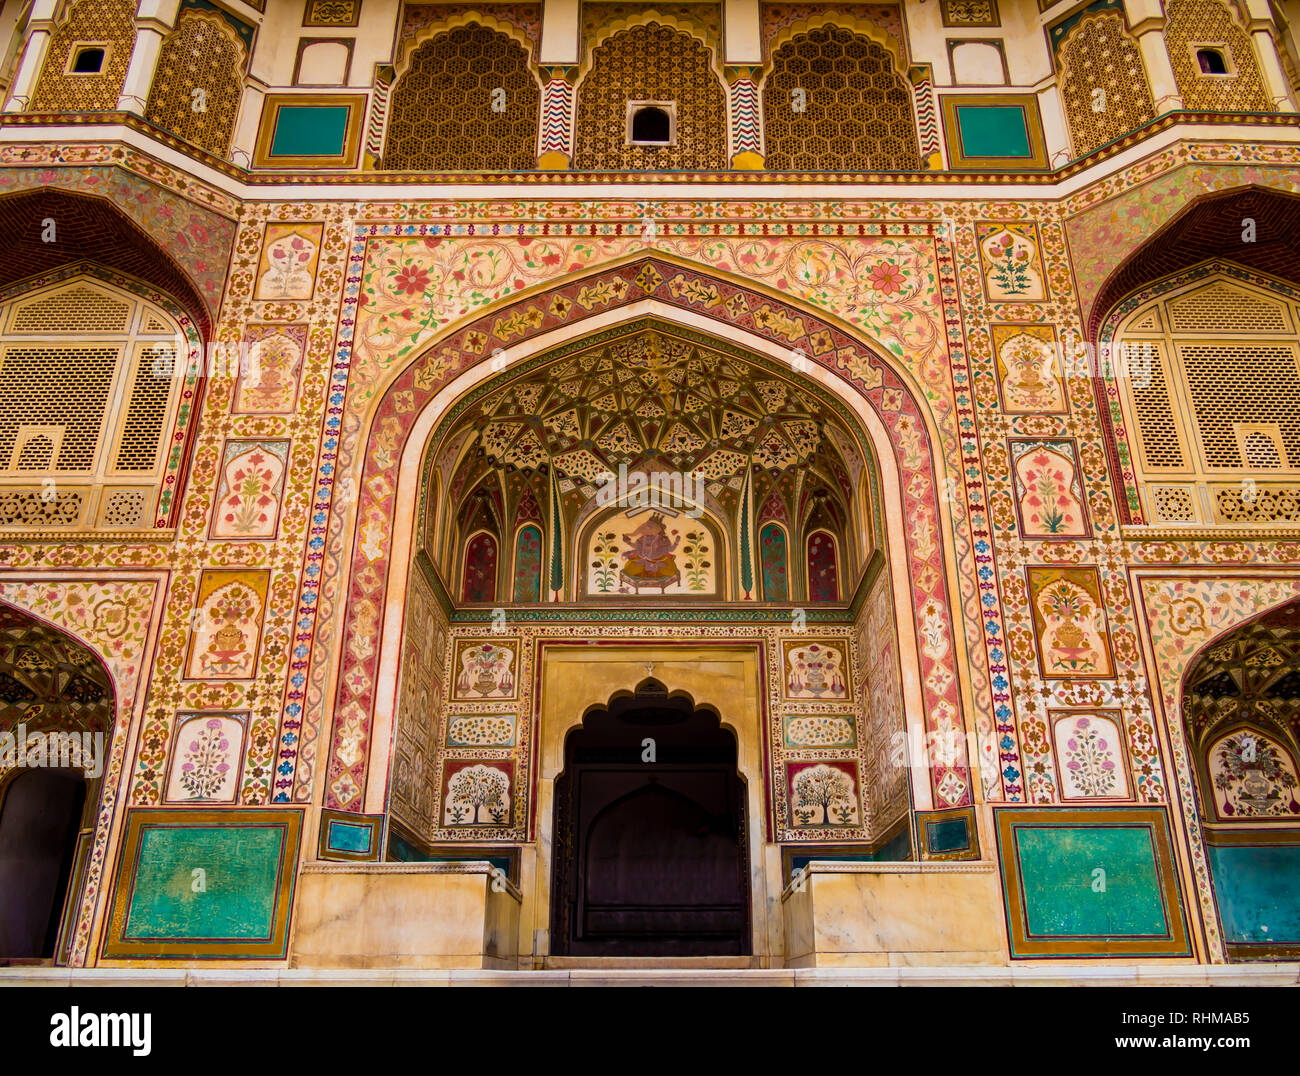 Impressive facade of Ganesh Pol entrance in Amber Fort Palace, Jaipur, Rajasthan, India Stock Photo